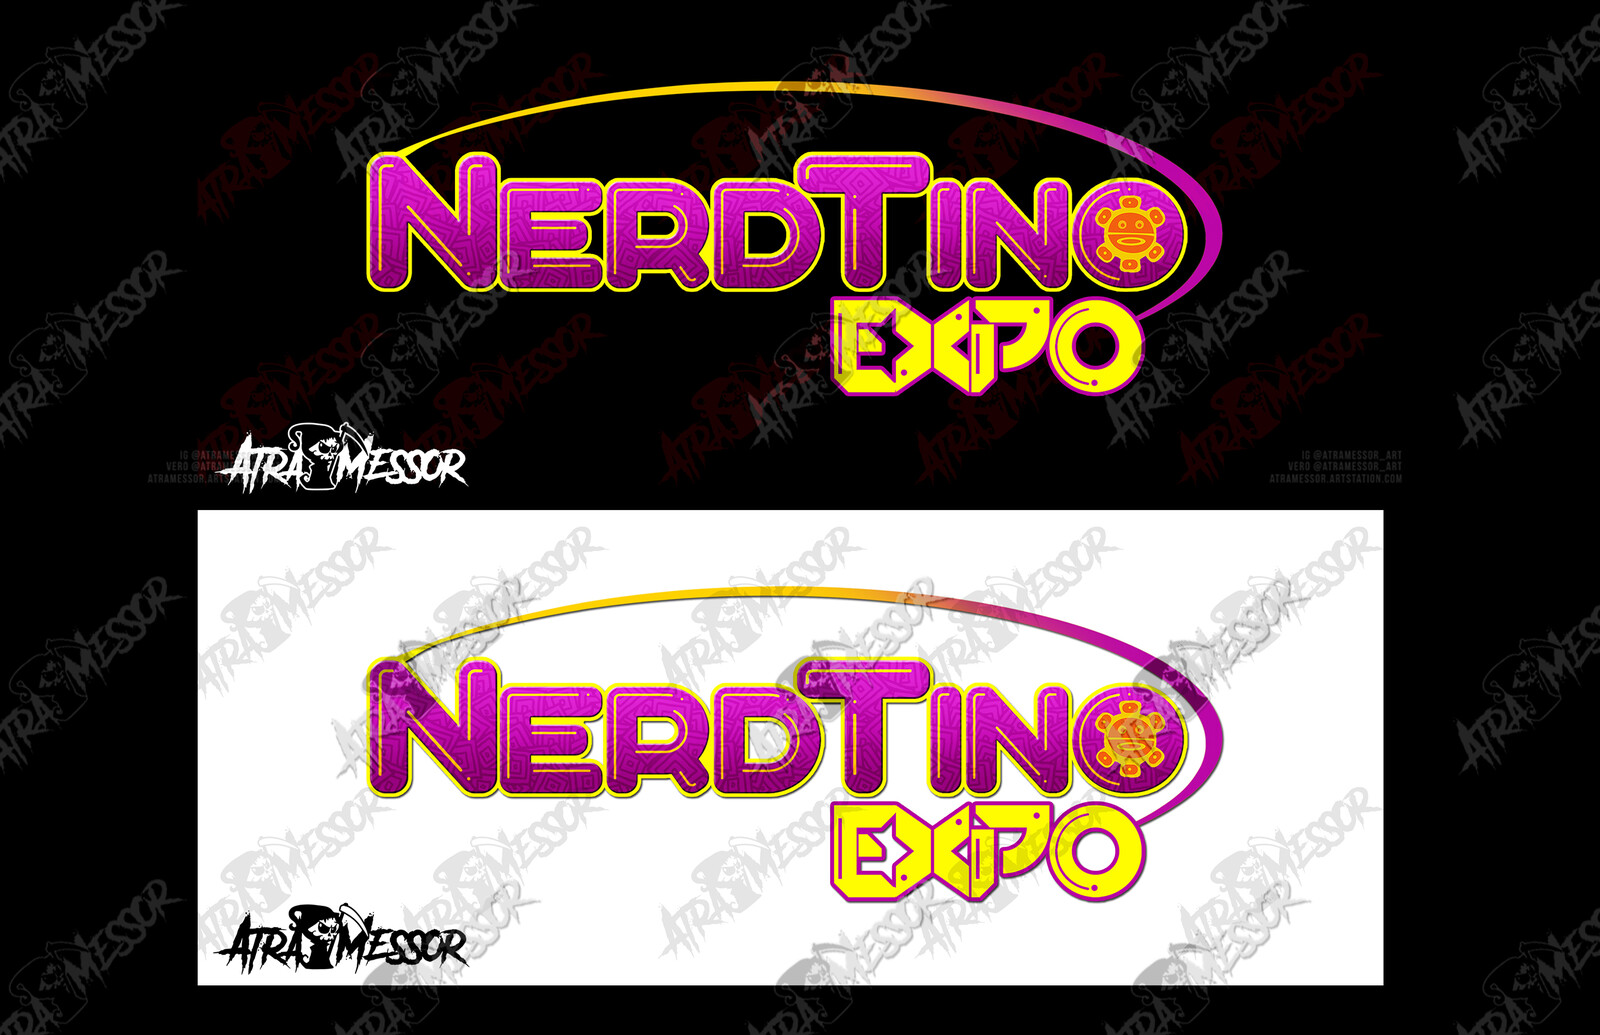 Nerdtino Expo Logo
(commission)